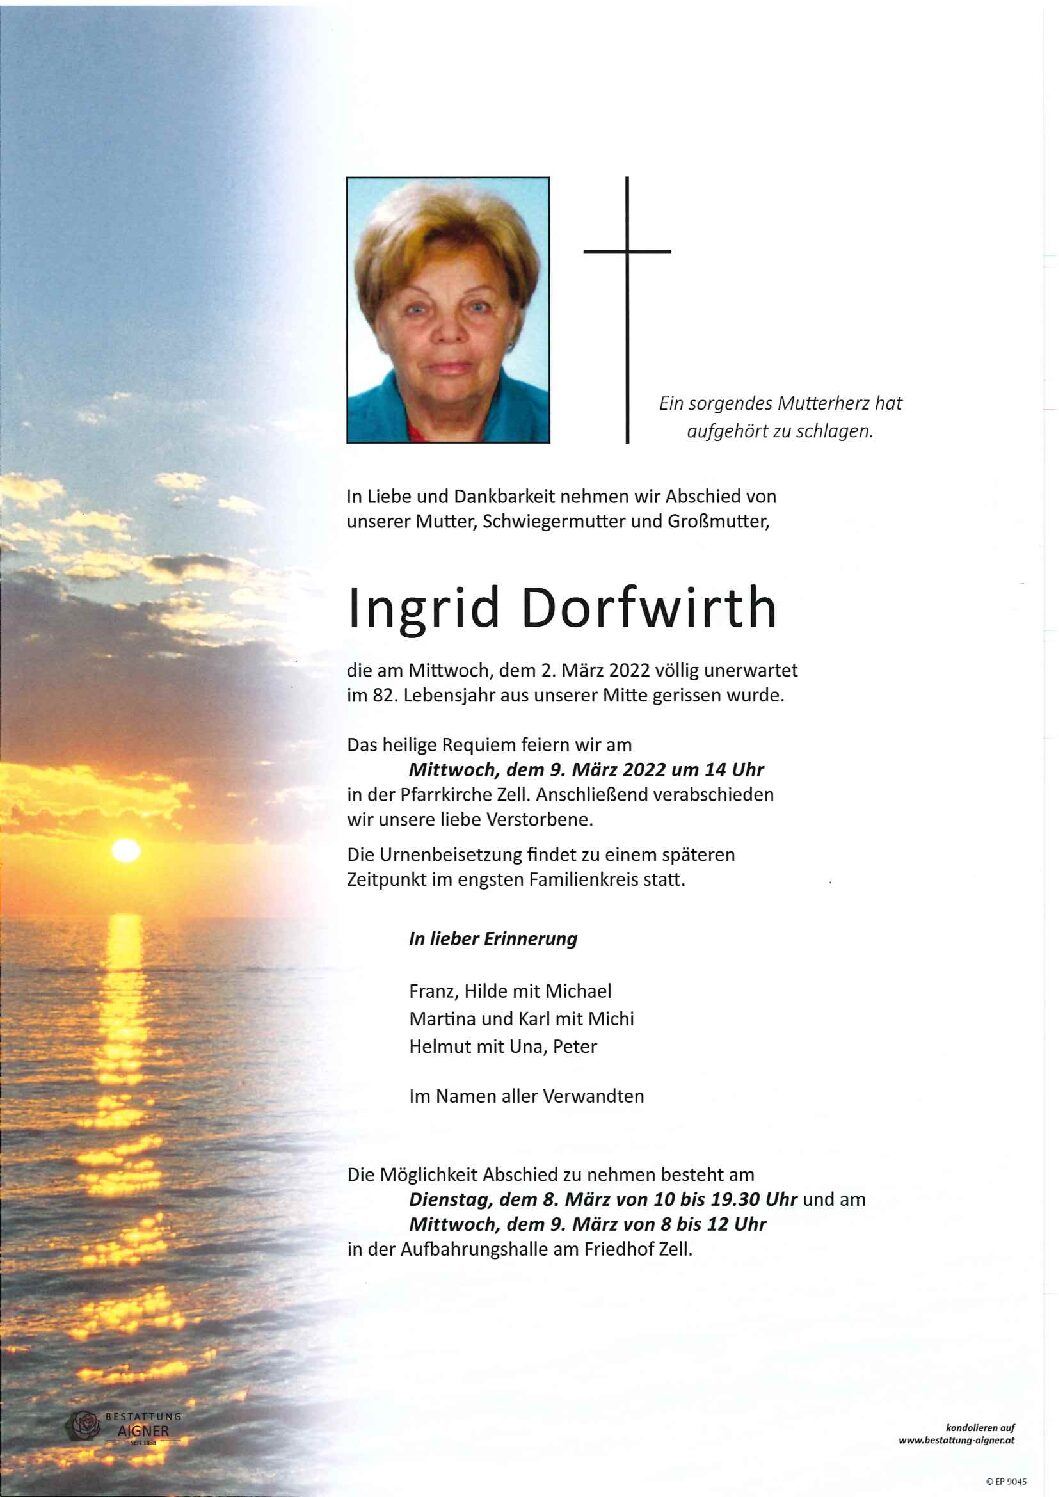 Ingrid Dorfwirth